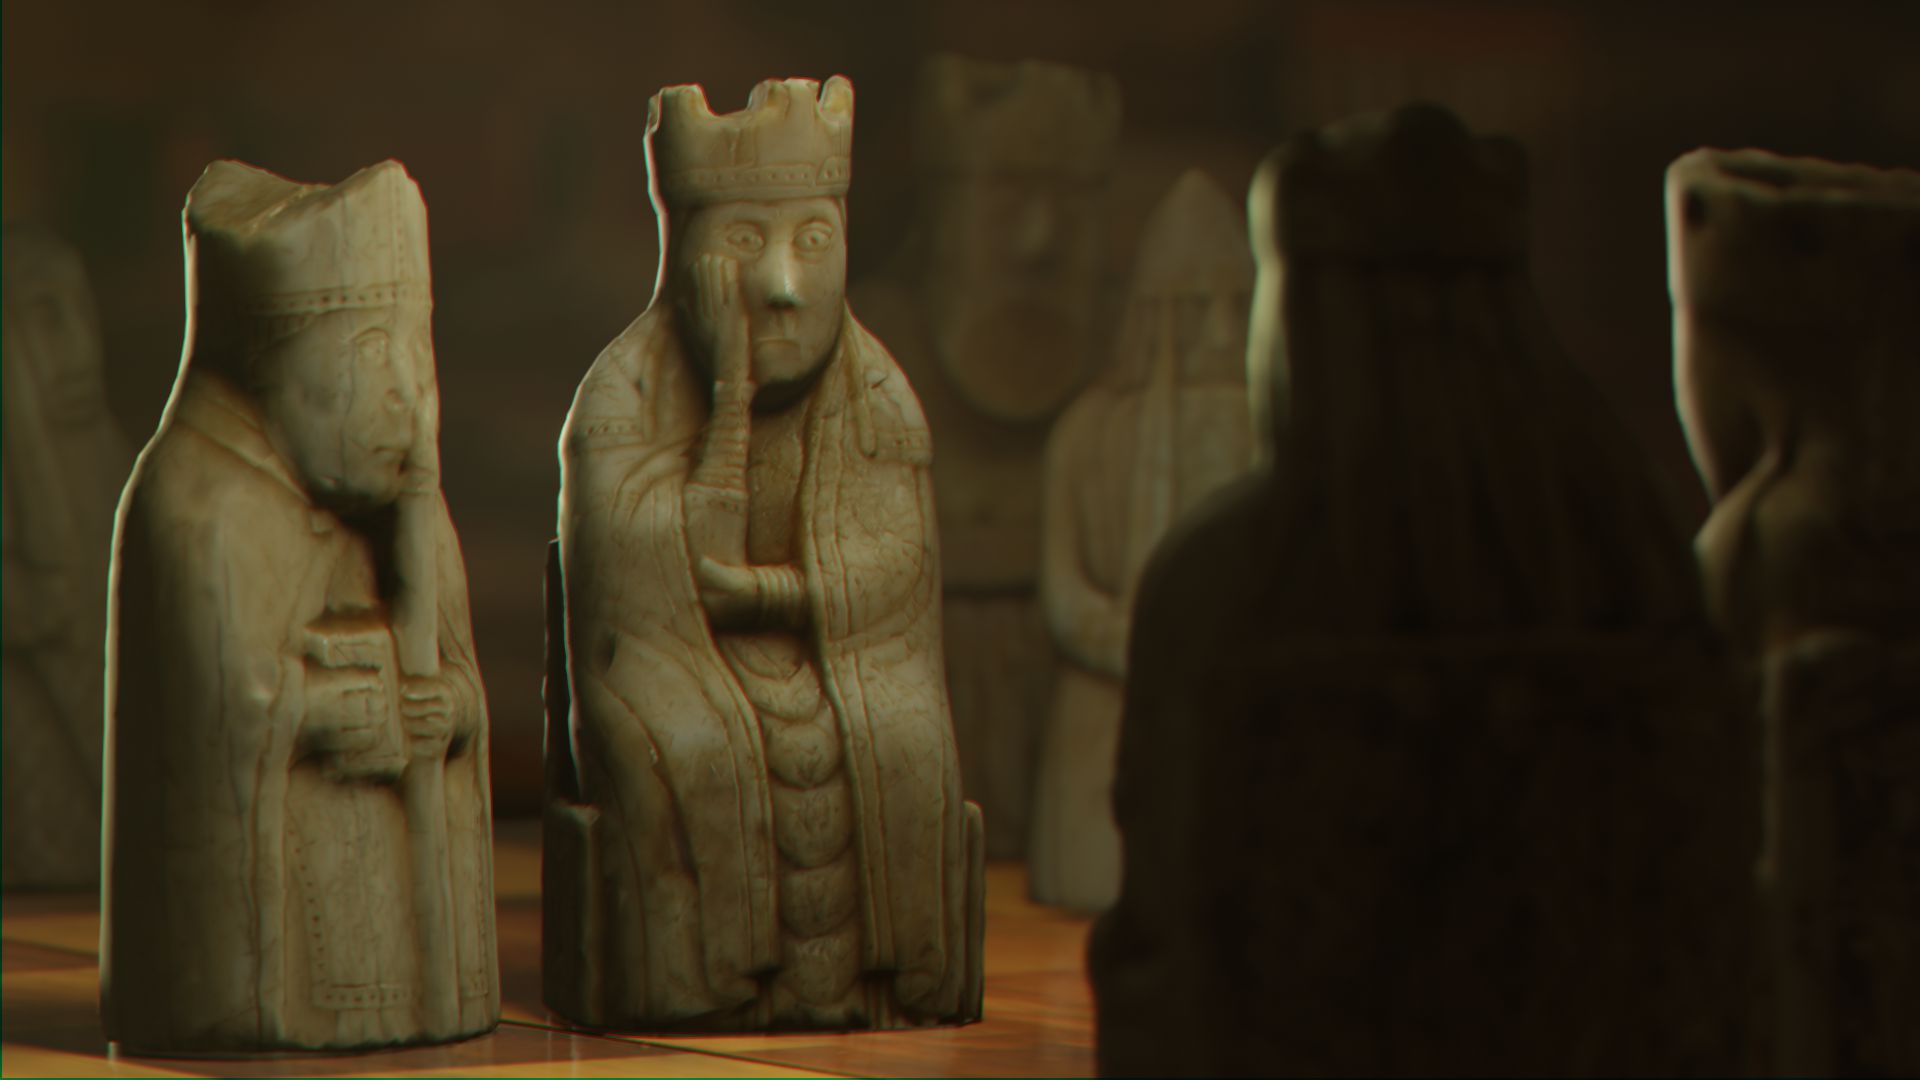 Ancient Chess Set